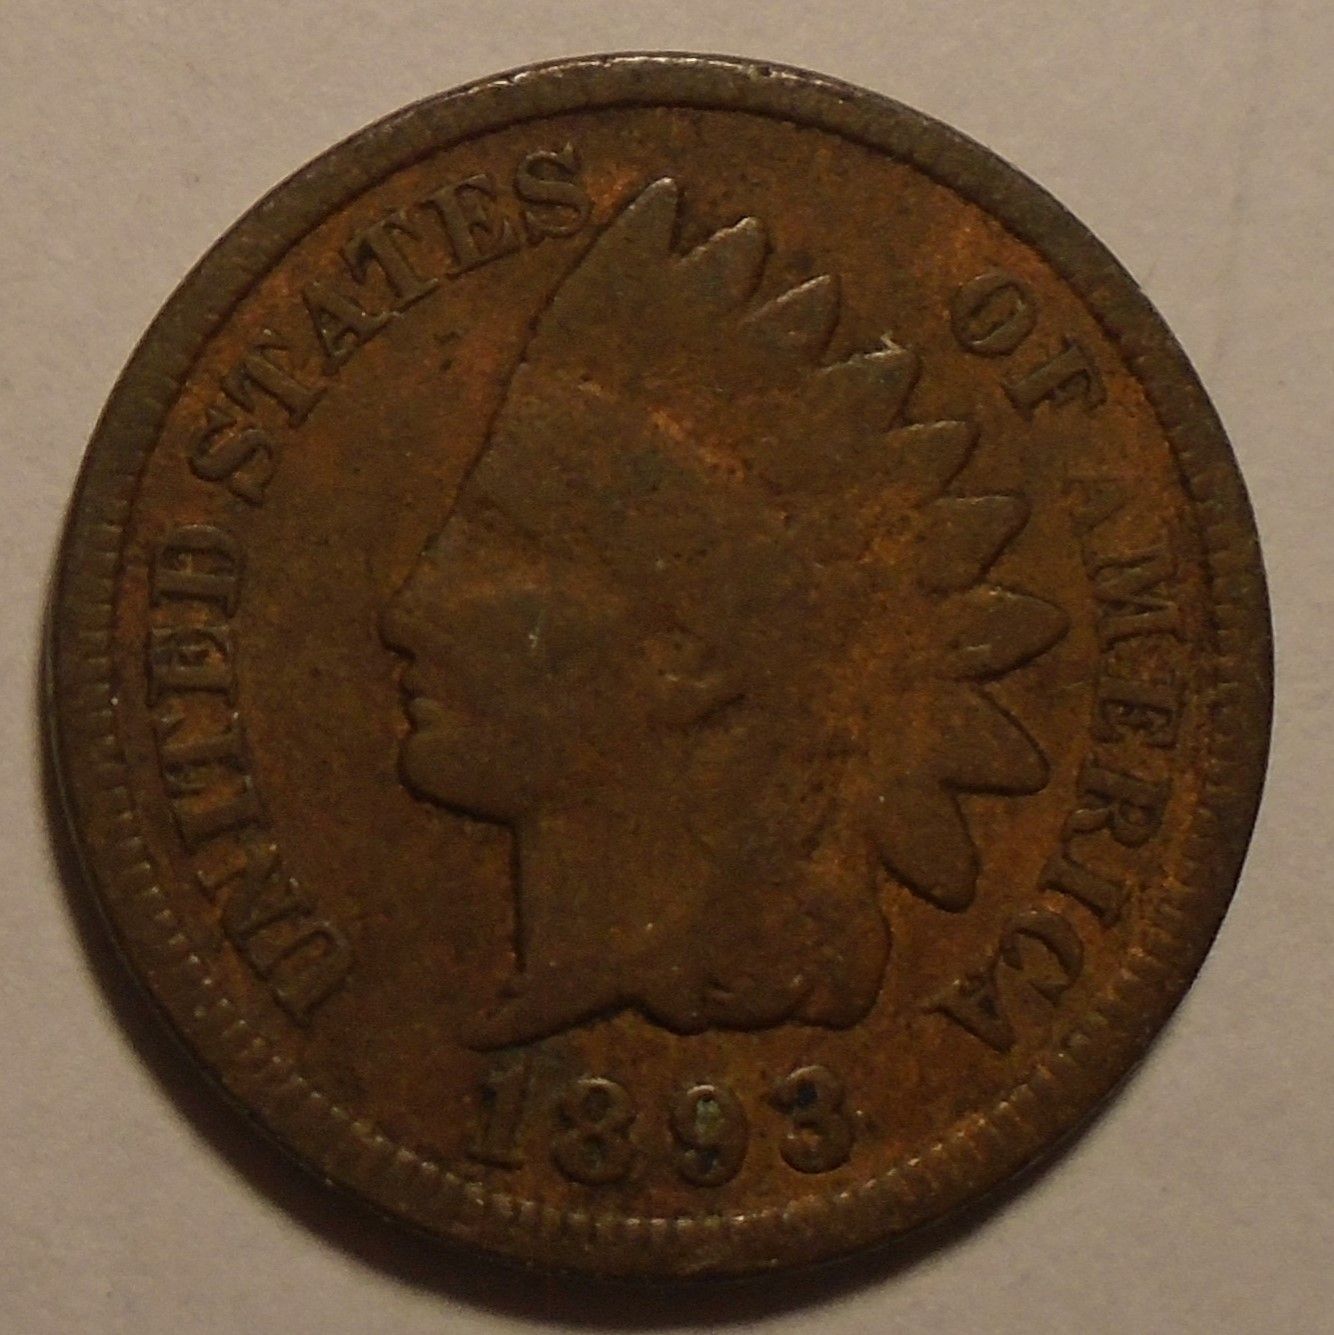 USA 1 Cent 1893